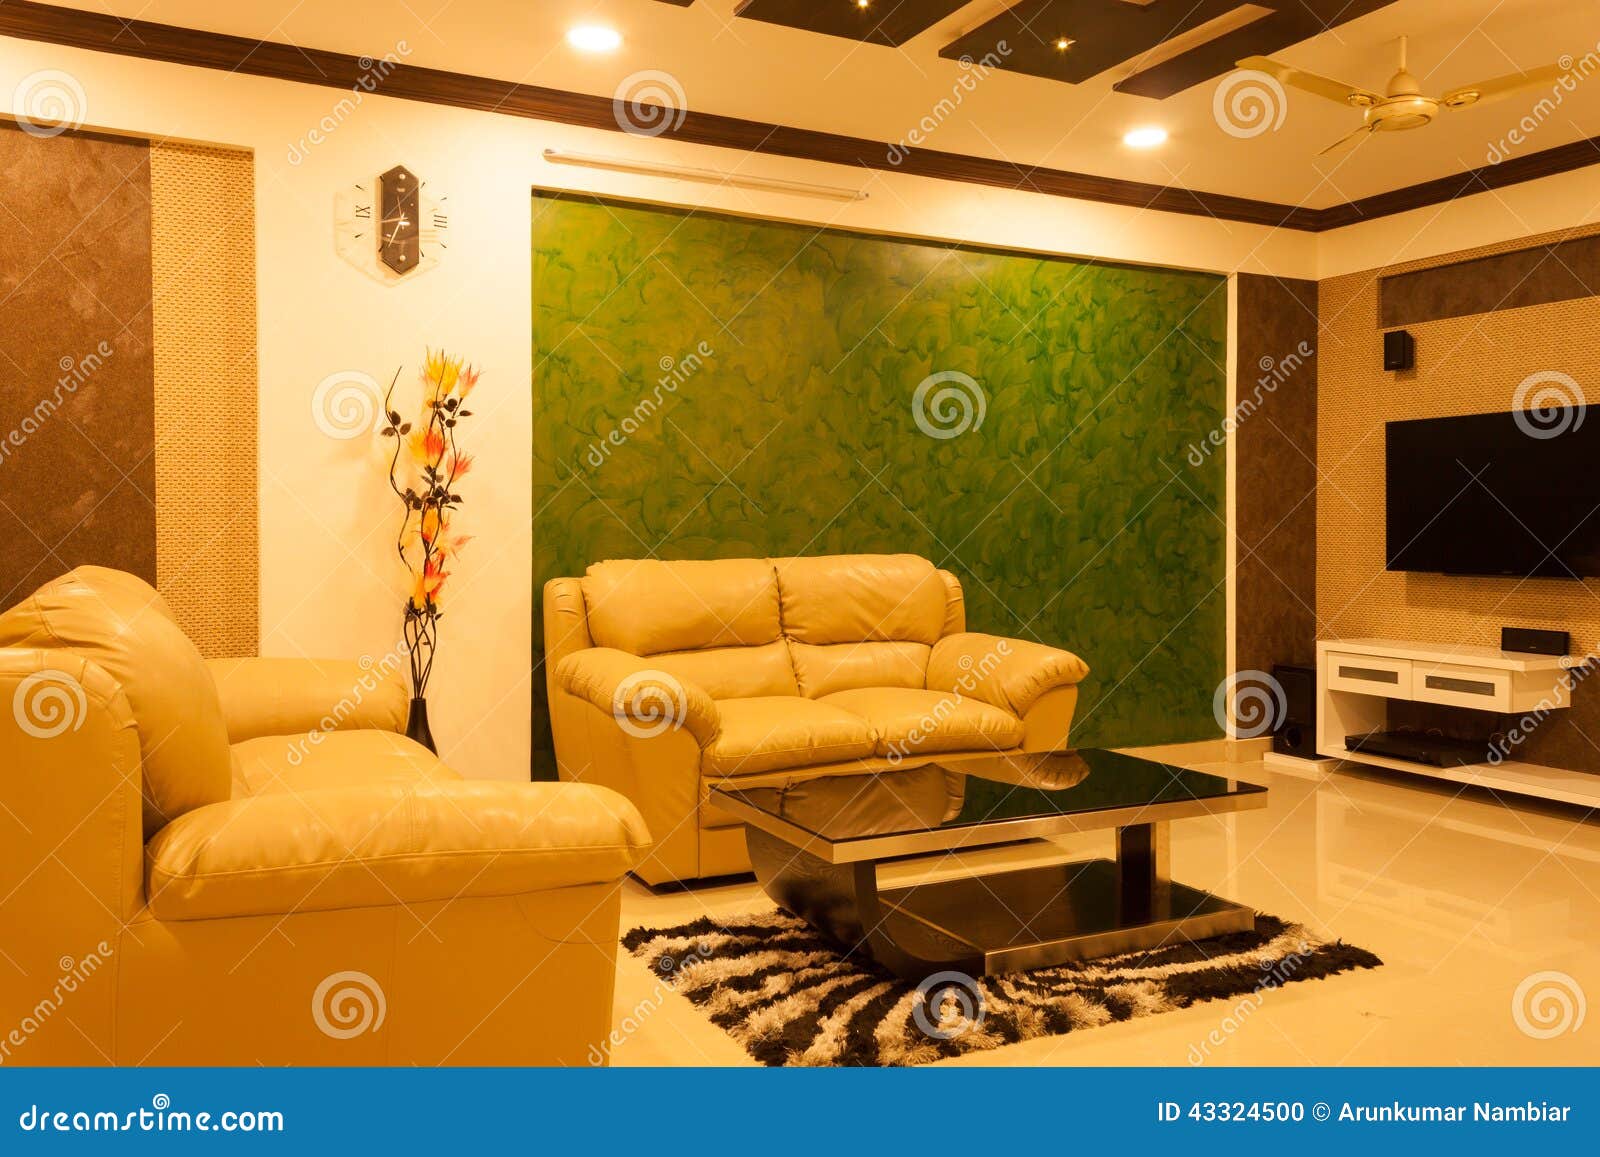 modern living room stand light